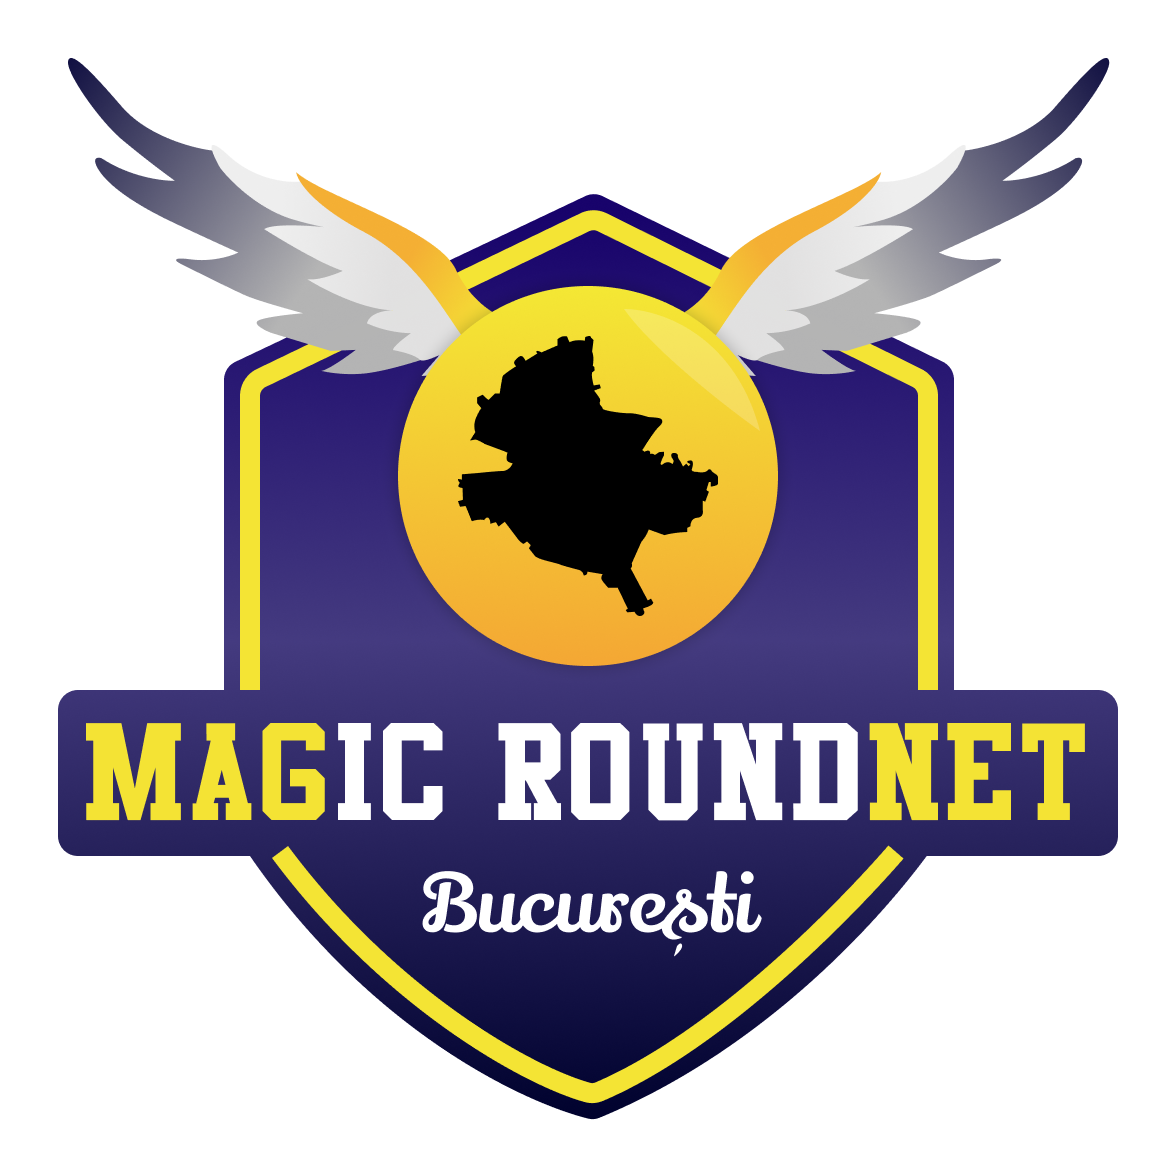 ACS Magic Roundnet Bucuresti logo